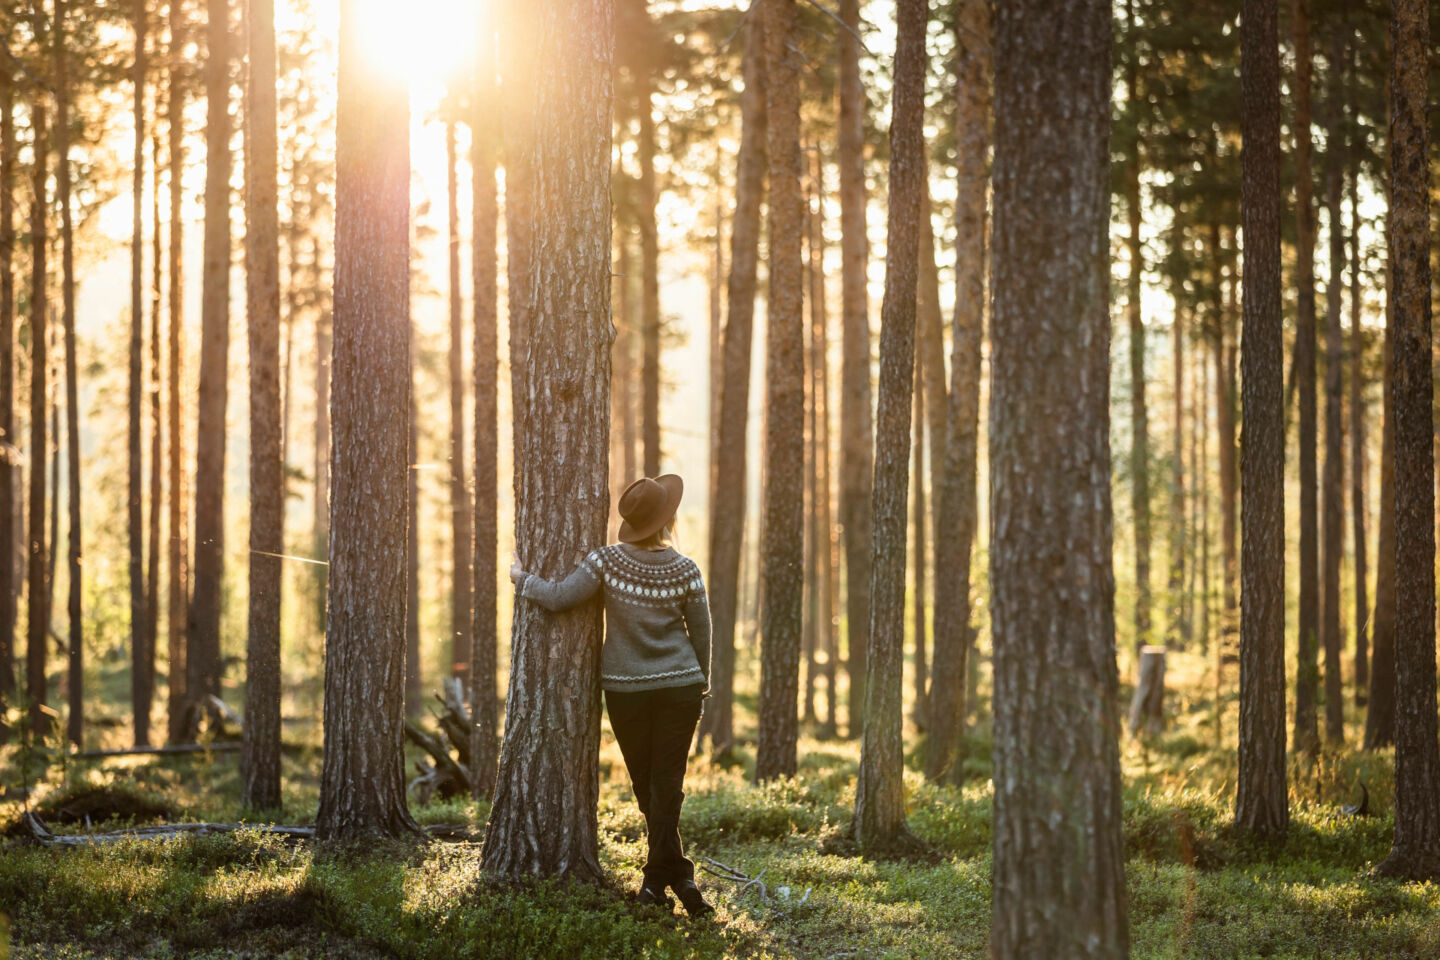 Finnish Lapland, home of Europe's last wilderness film locations